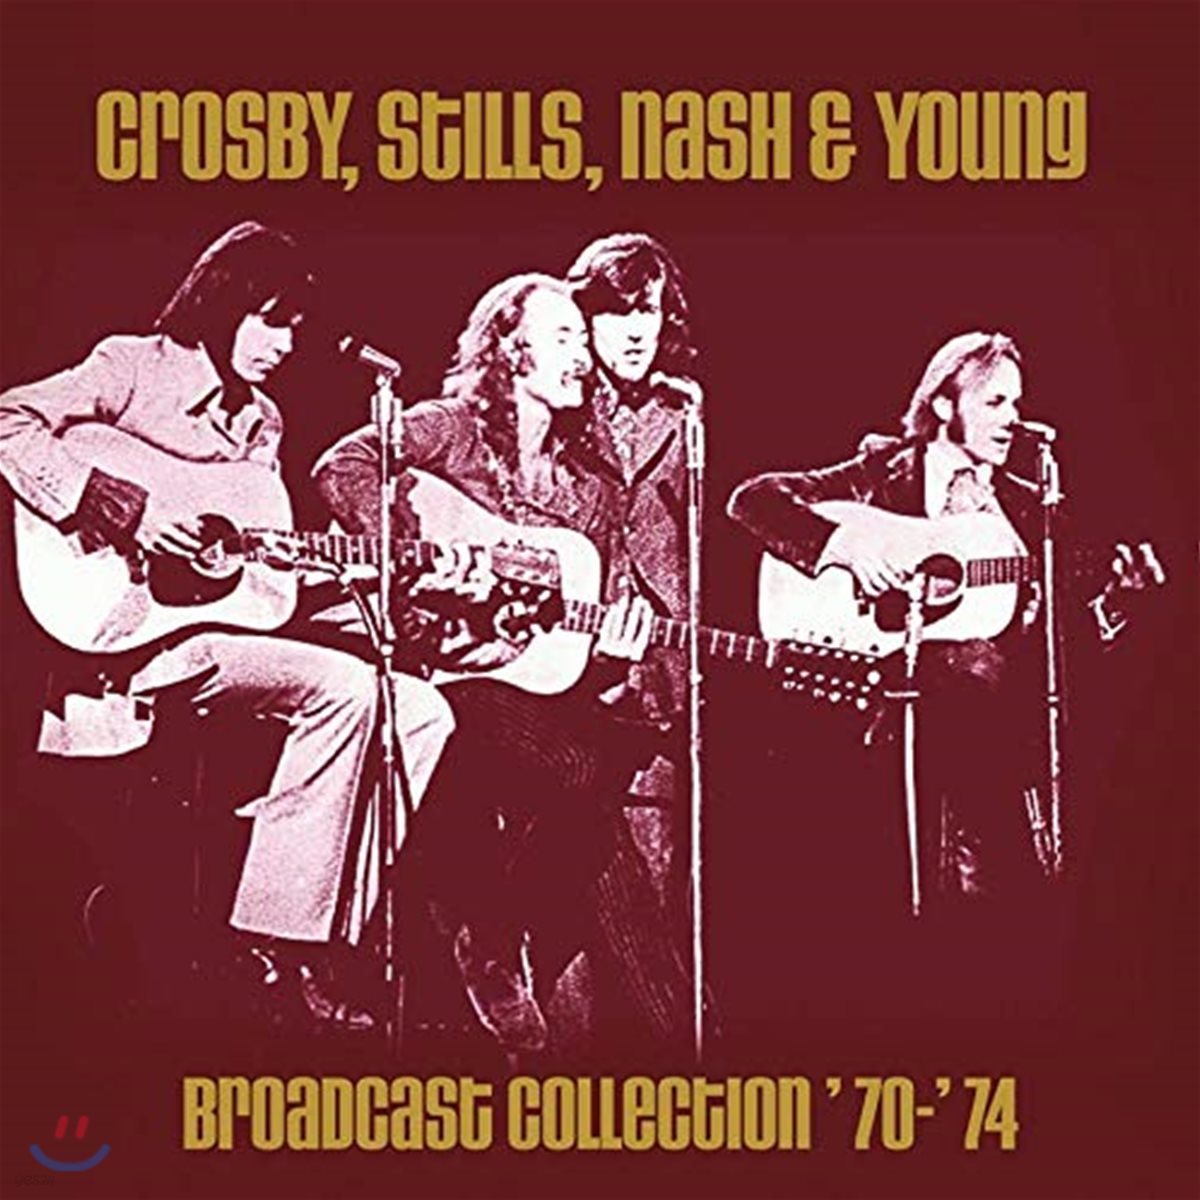 Crosby, Stills, Nash & Young (크로스비, 스틸스, 내쉬 앤 영) - Broadcast Collection '70 - '74